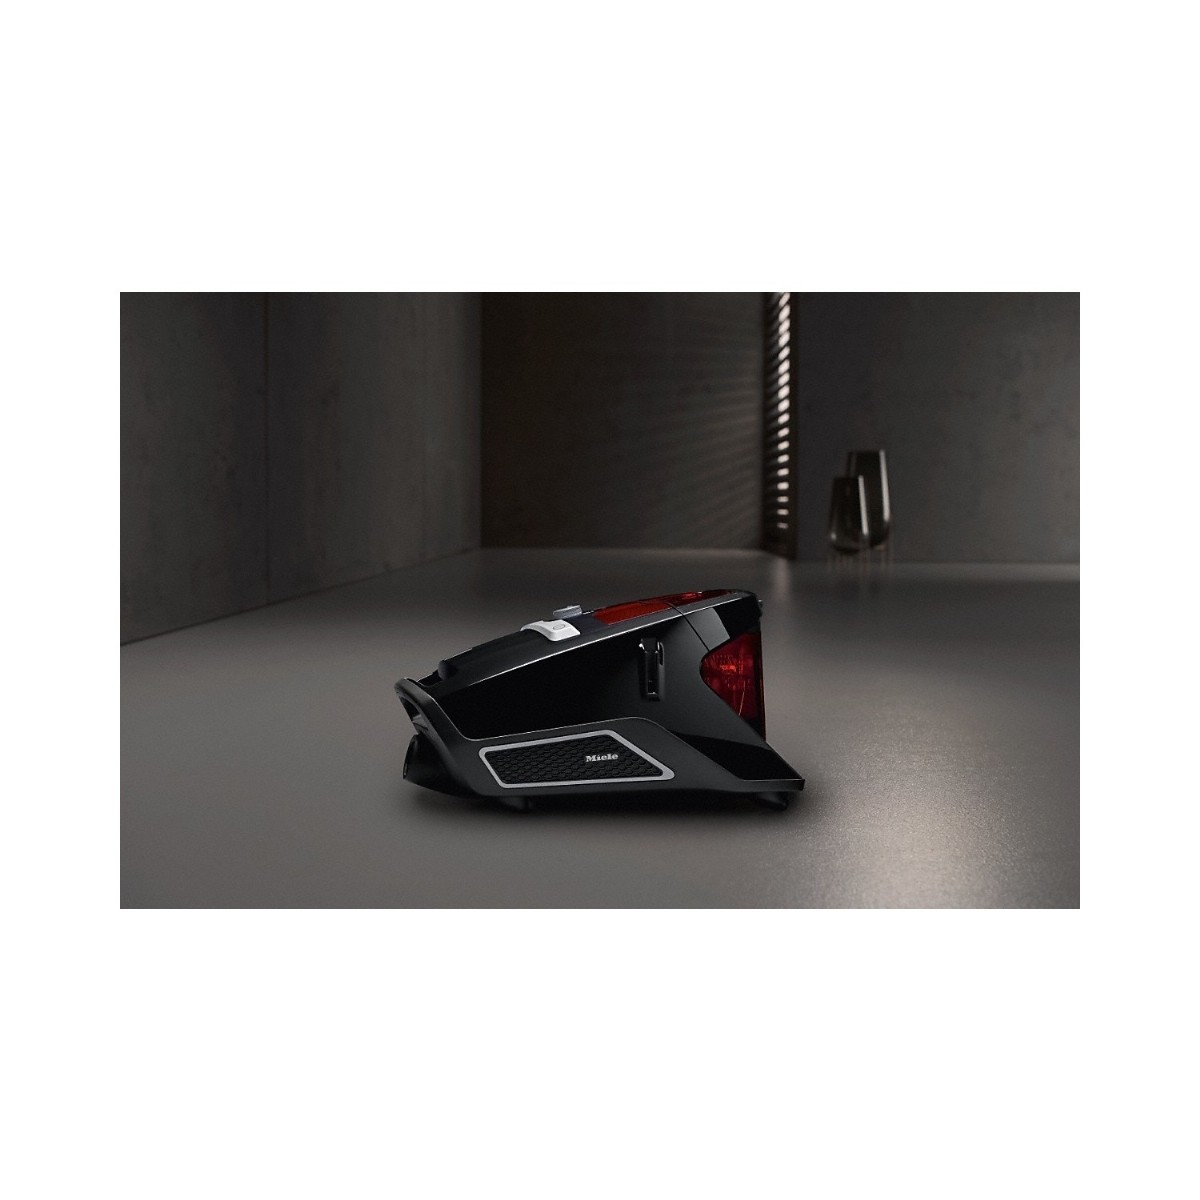 Elektrikli Süpürgeler | Miele Blizzard CX1 Red Edition PowerLine SKRF3 890 W Elektrikli Süpürge | SKRF3R | skrf3r, SKRF3R, Miele Blizzard CX1 Red Edition PowerLine SKRF3 890 W Elektrikli Süpürge | 